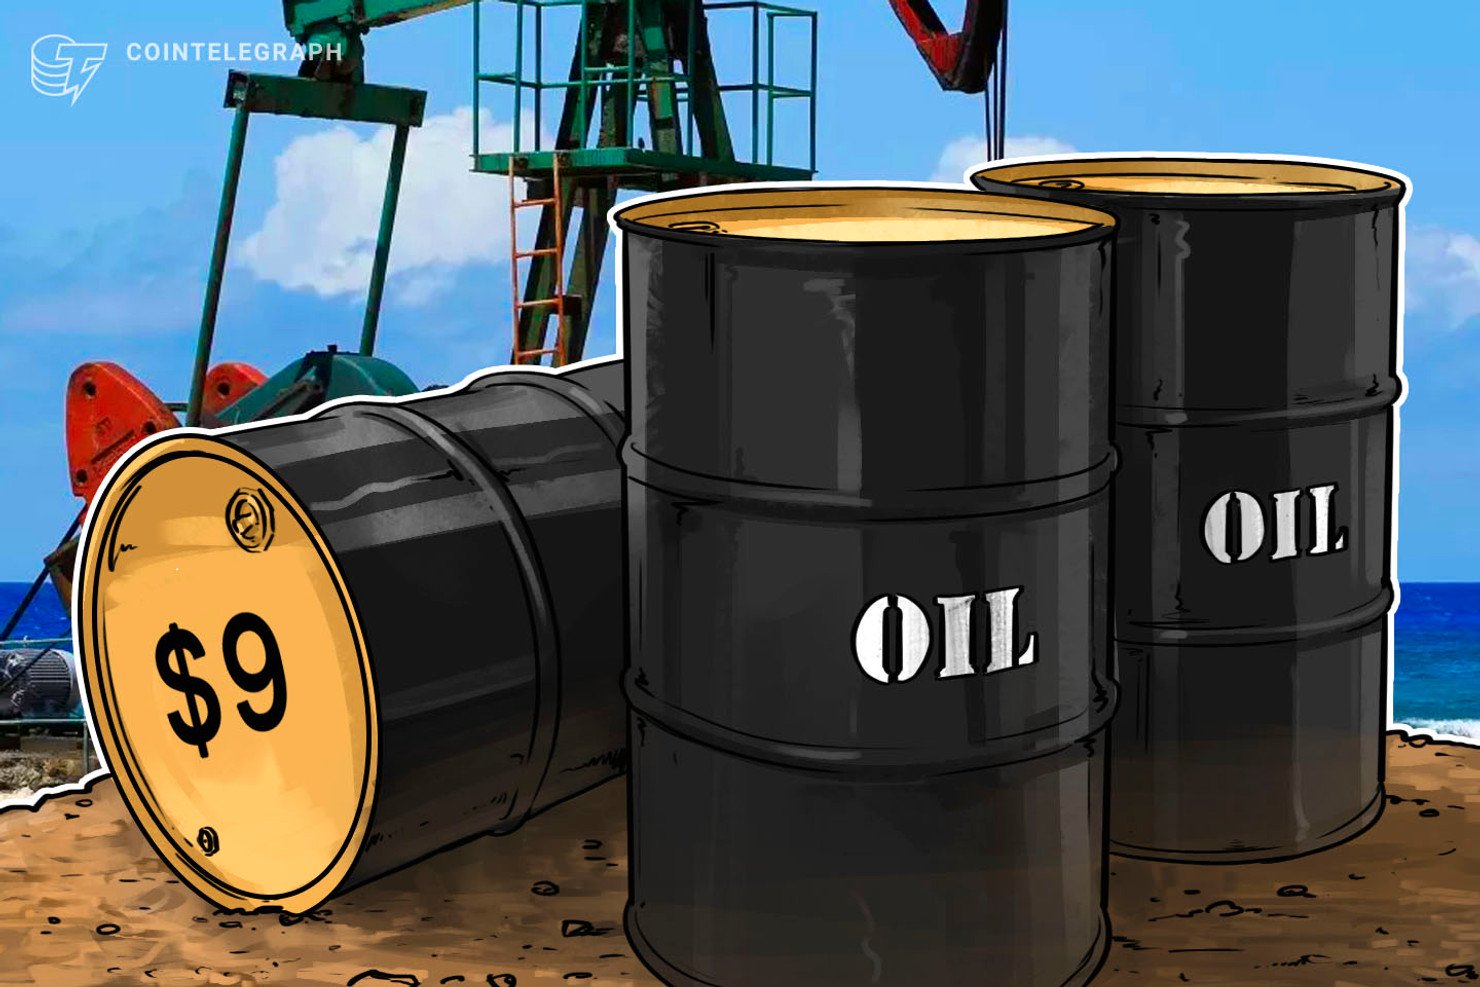 7FB912EC 04A9 41B3 9AEC 735DBDF4692A - ترامپ خواستار سقوط قیمت نفت به بشکه ای ۹ دلار می باشد .